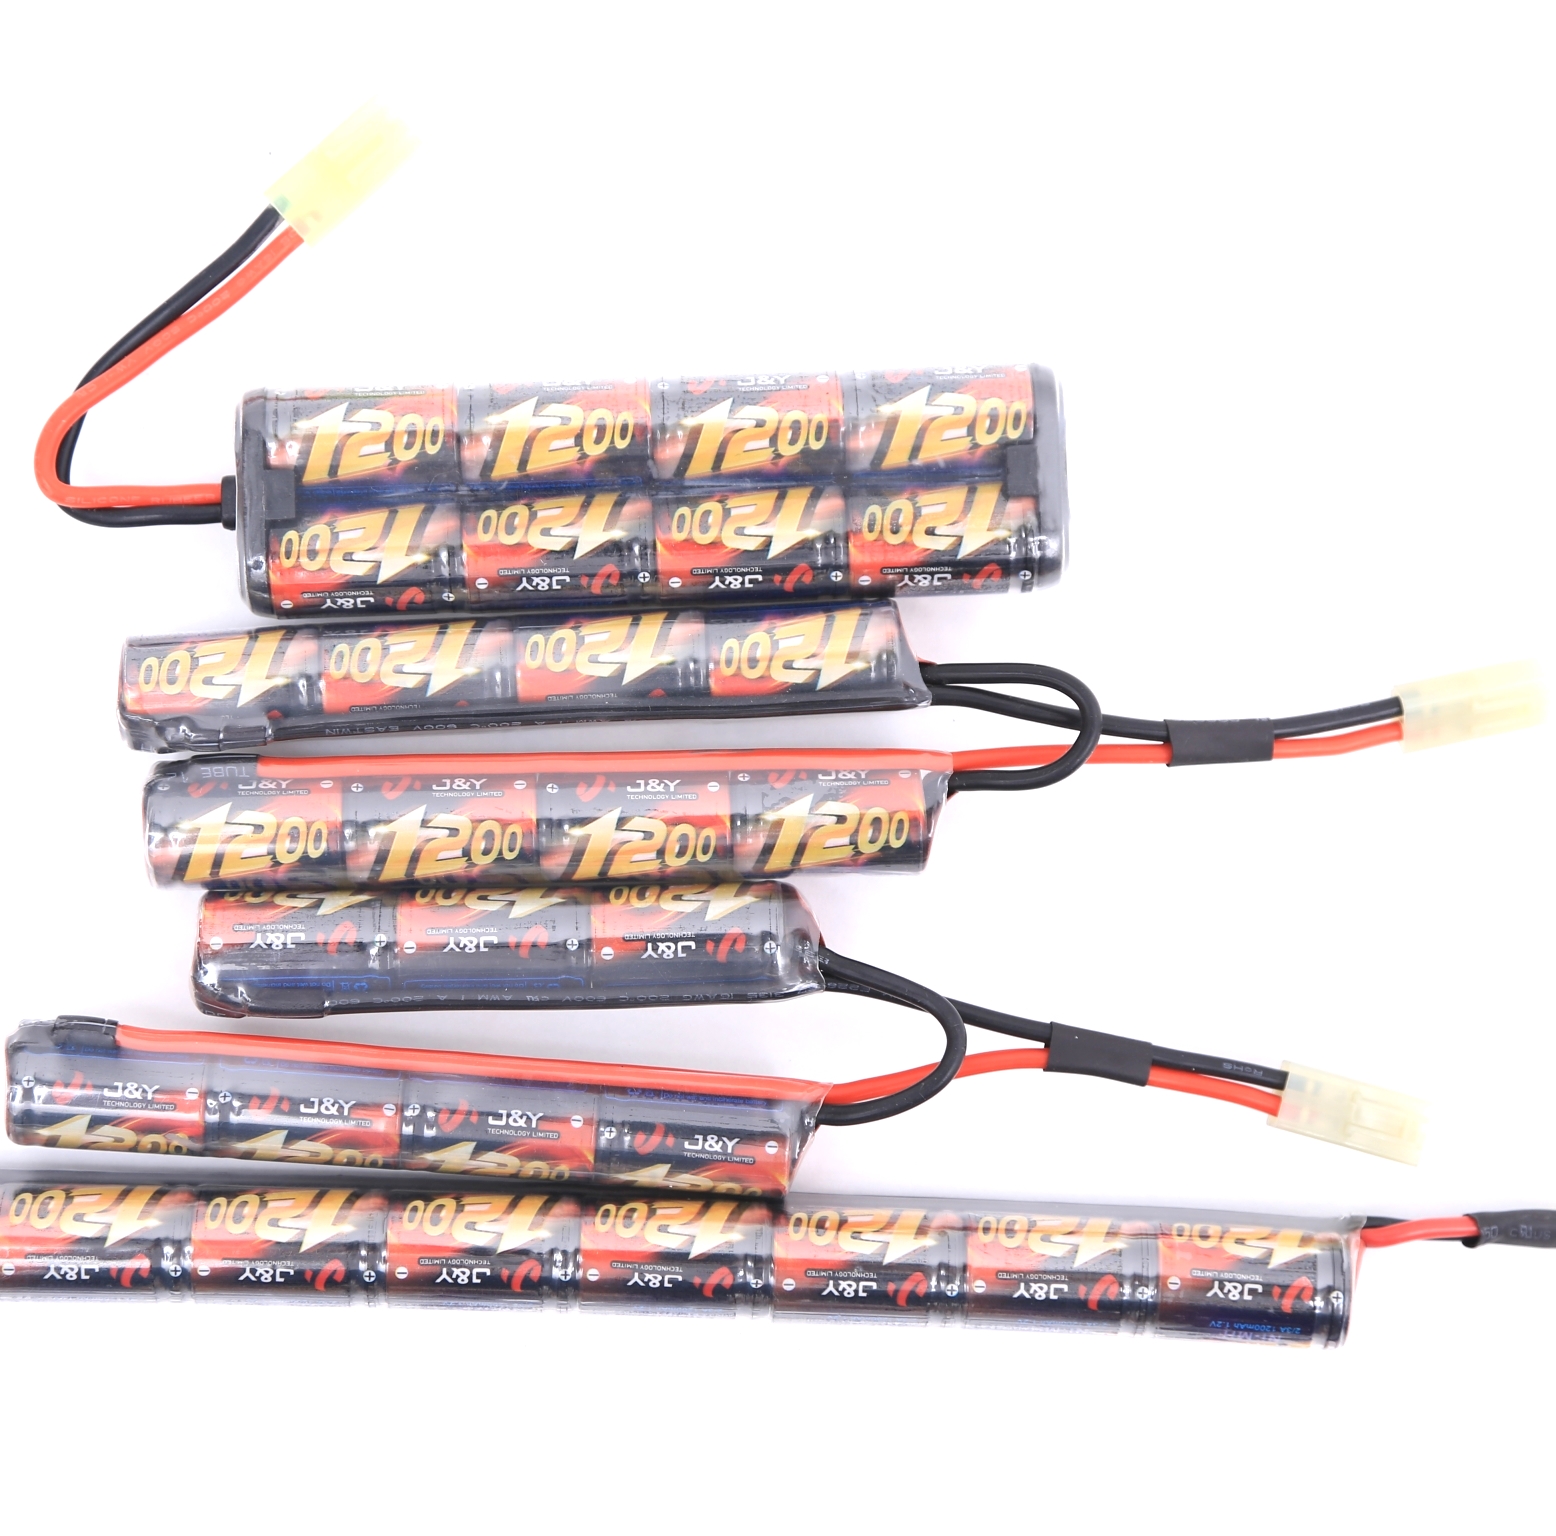 Nimh rechargeable batteries